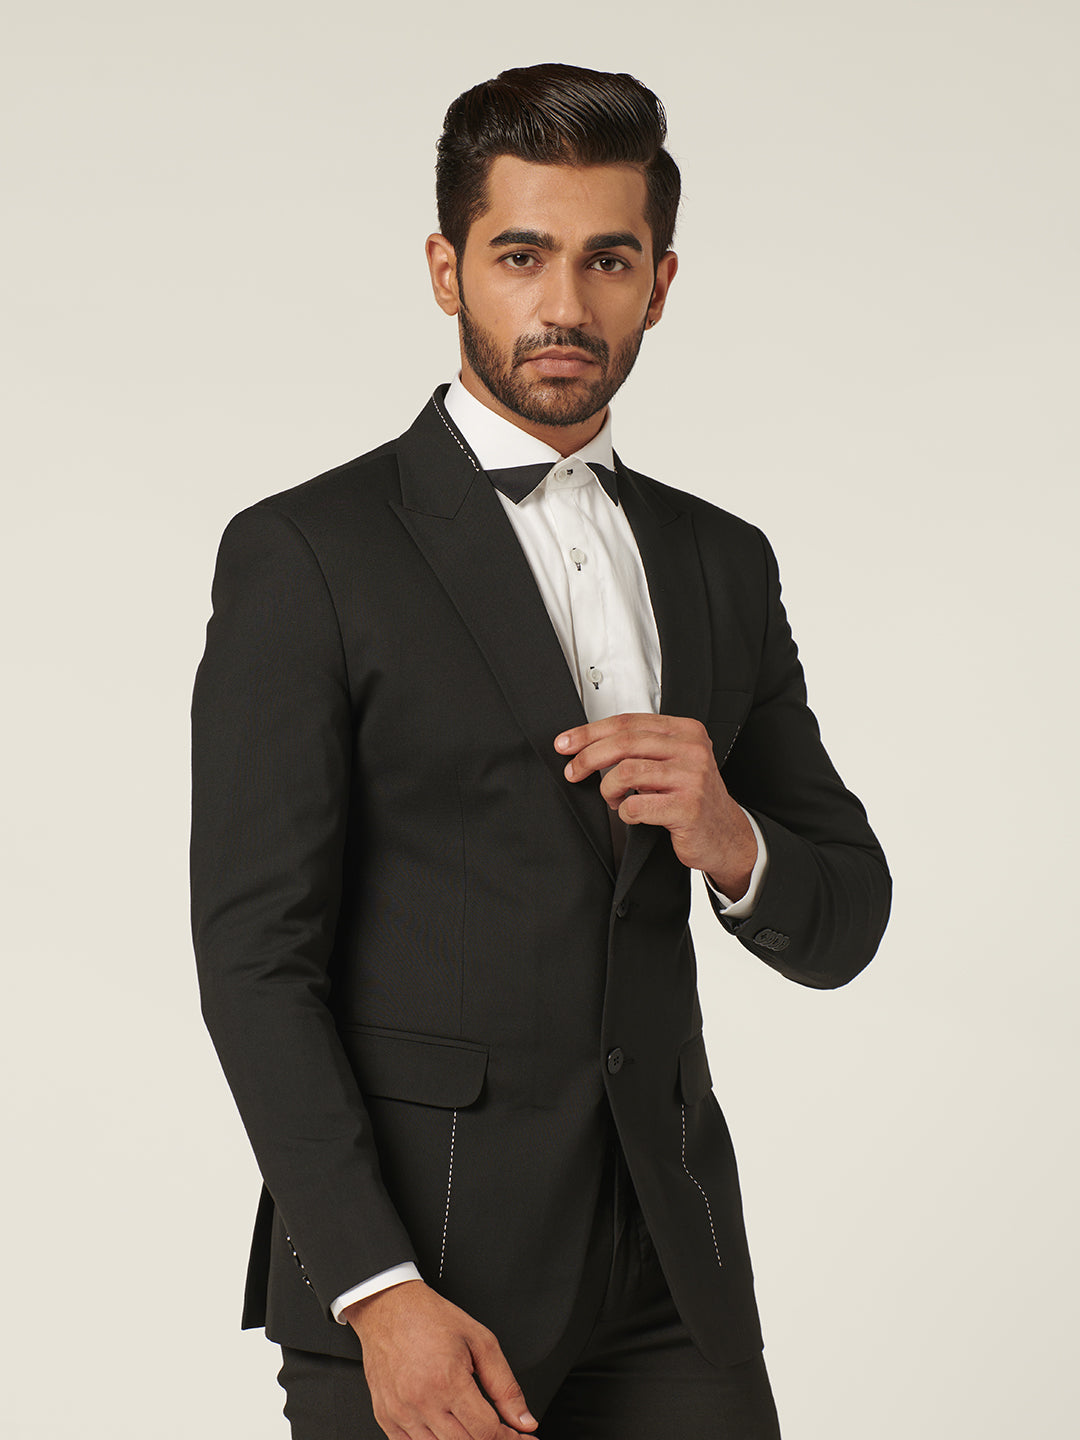 Omar Nihad Mr Erbil Gentleman's Club | Suit fashion, Wedding suits, Suits